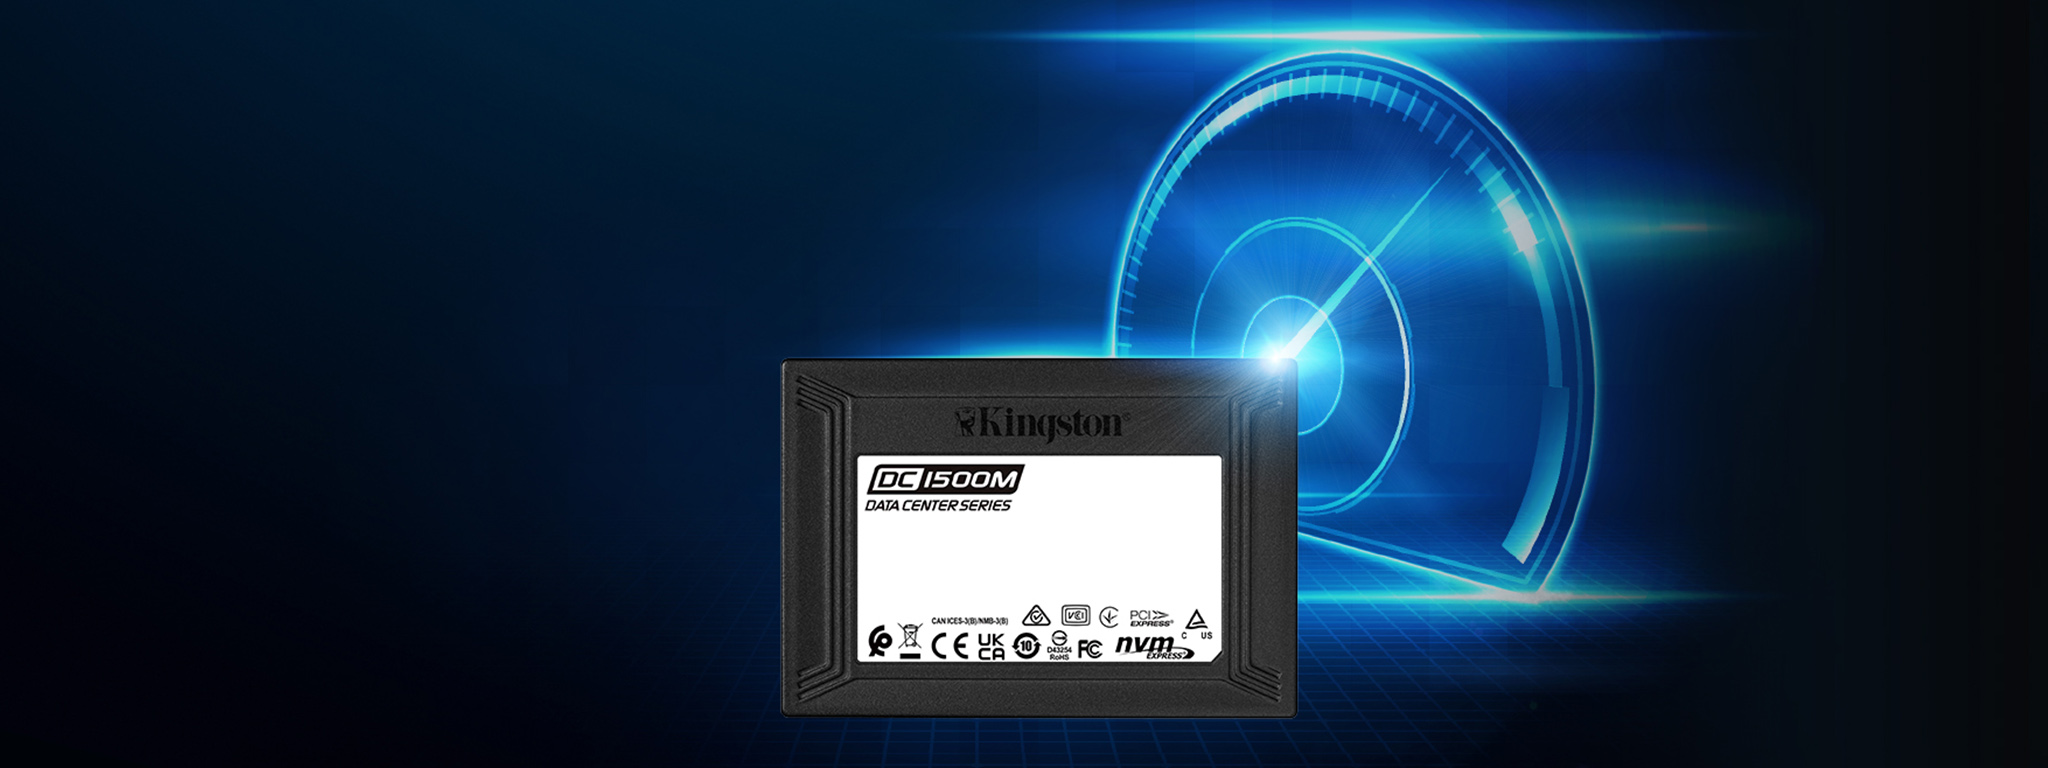 SSD Kingston DC1500M frente a un gráfico de un velocímetro azul brillante que representa alta velocidad